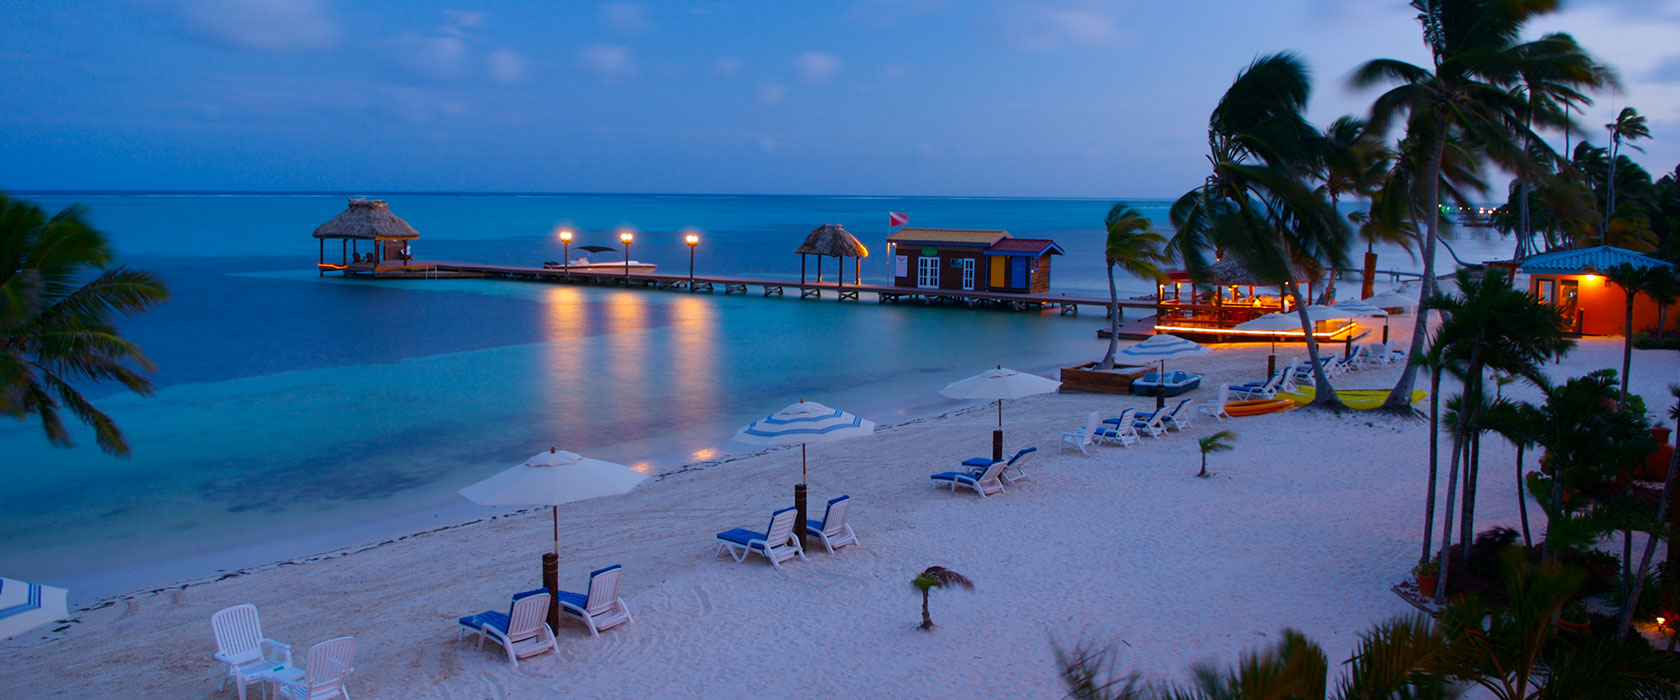 Belize-Vacation-Resort.jpg